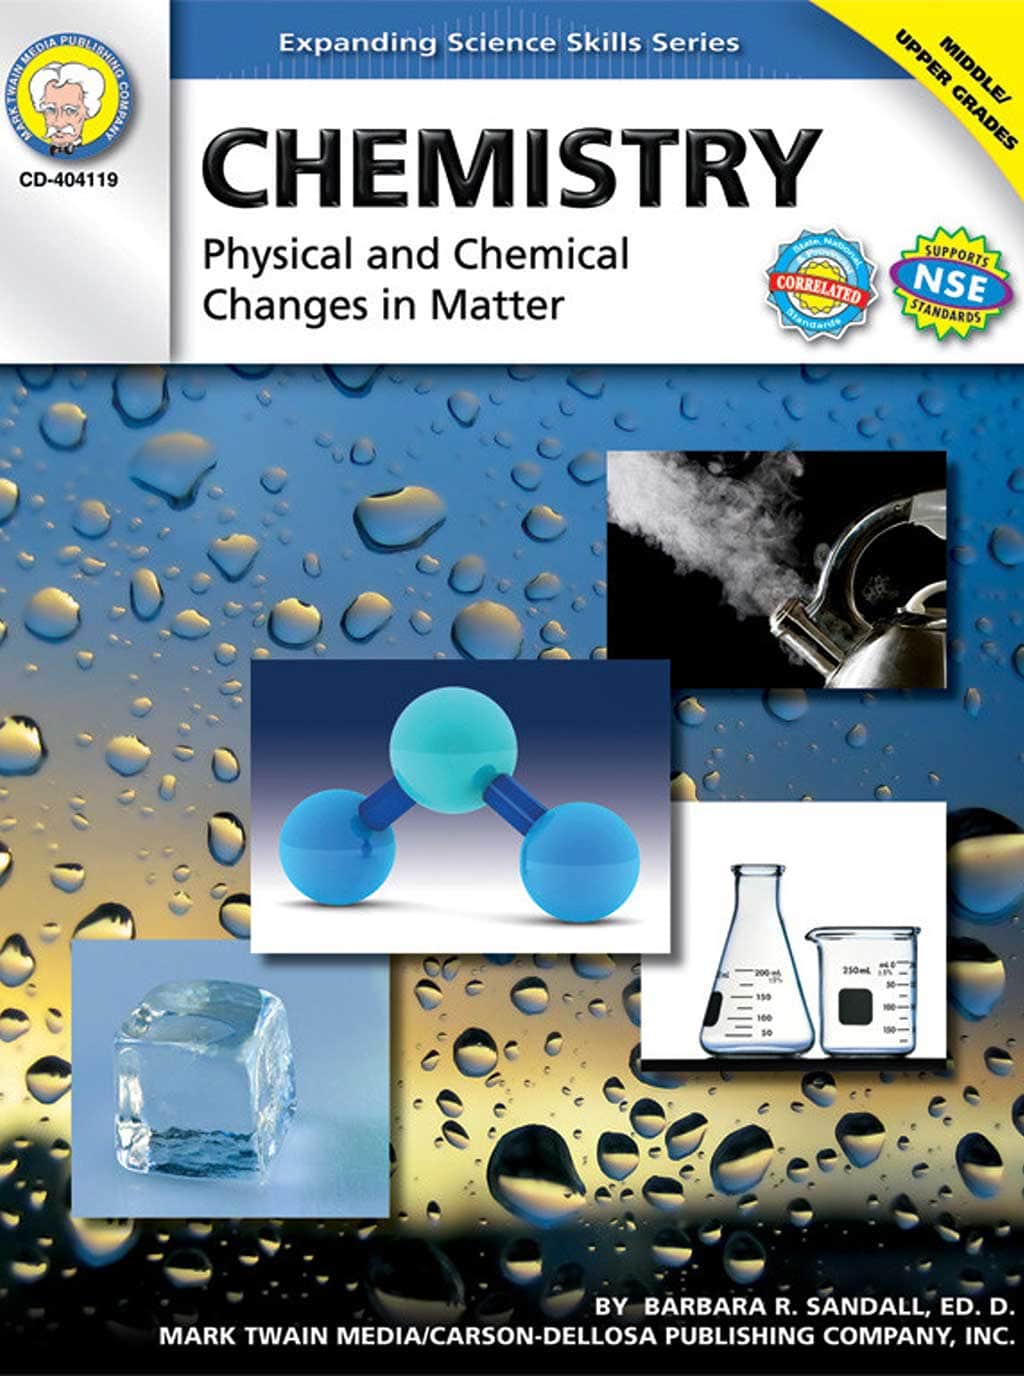 Science Shepherd homeschool chemistry lab activity book cover